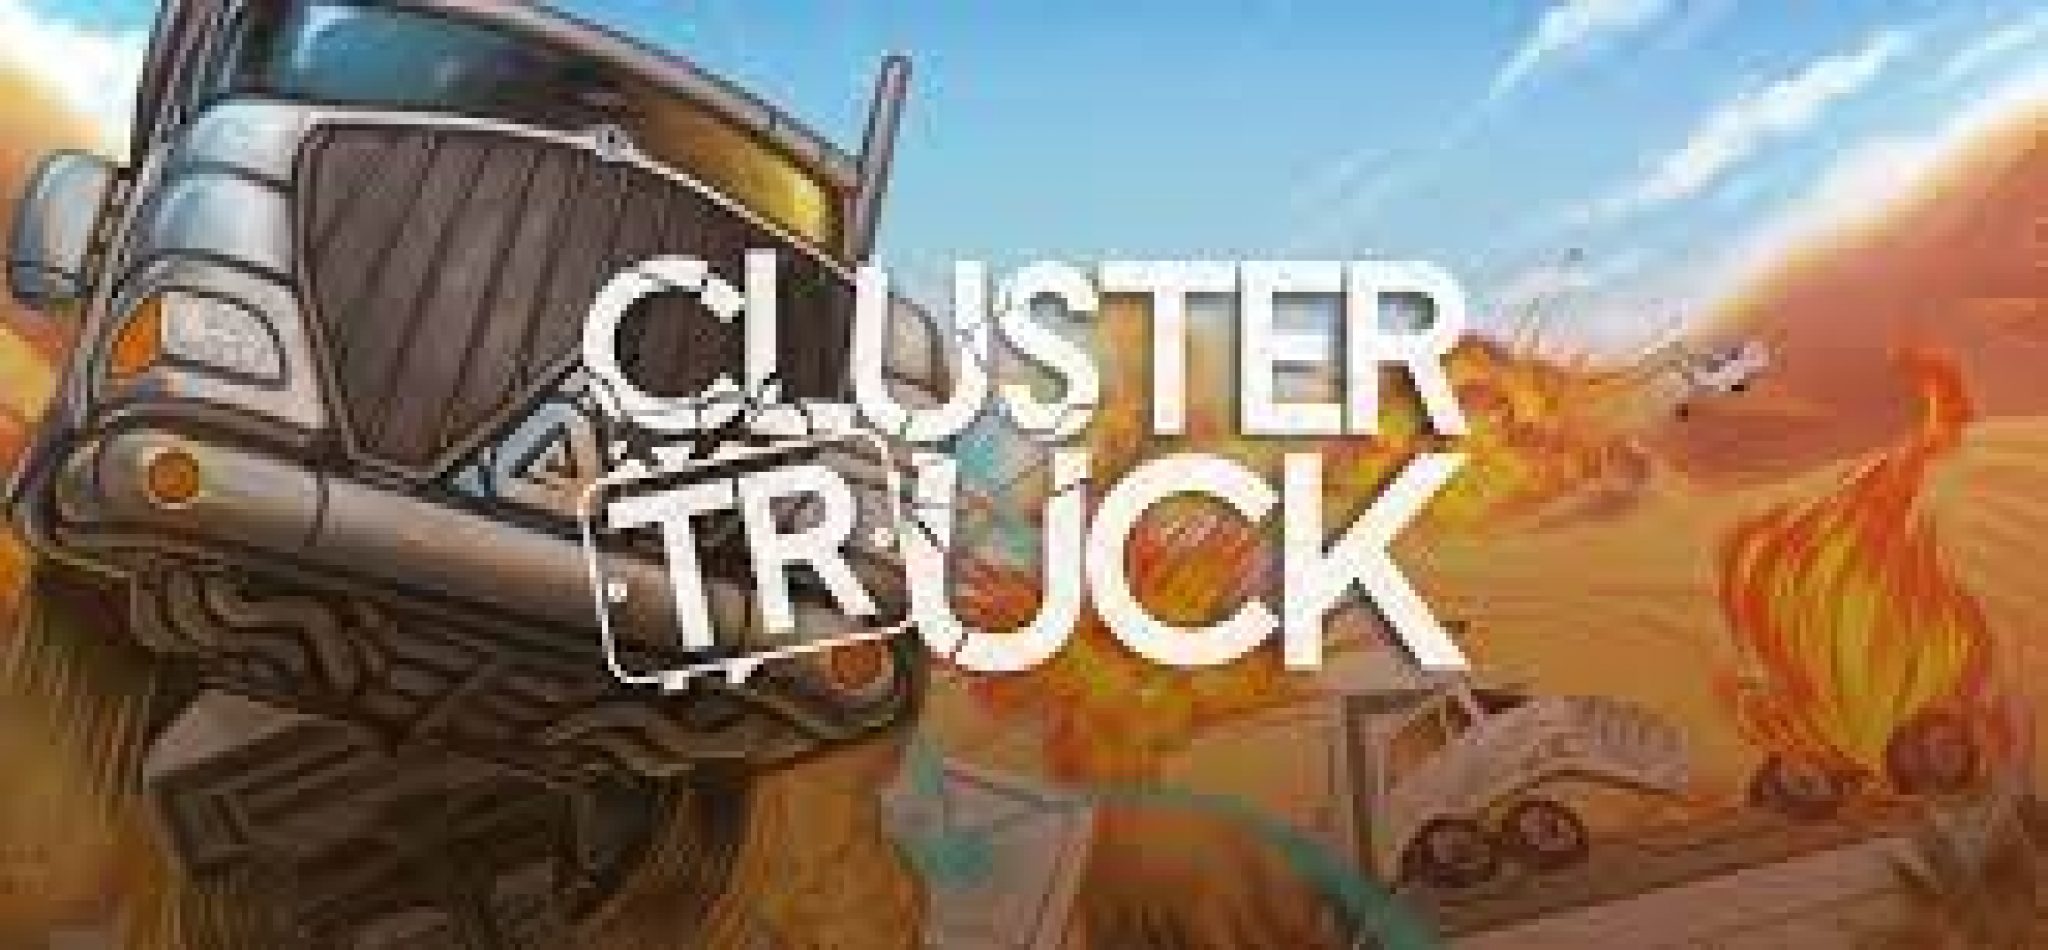 clustertruck update free pc download